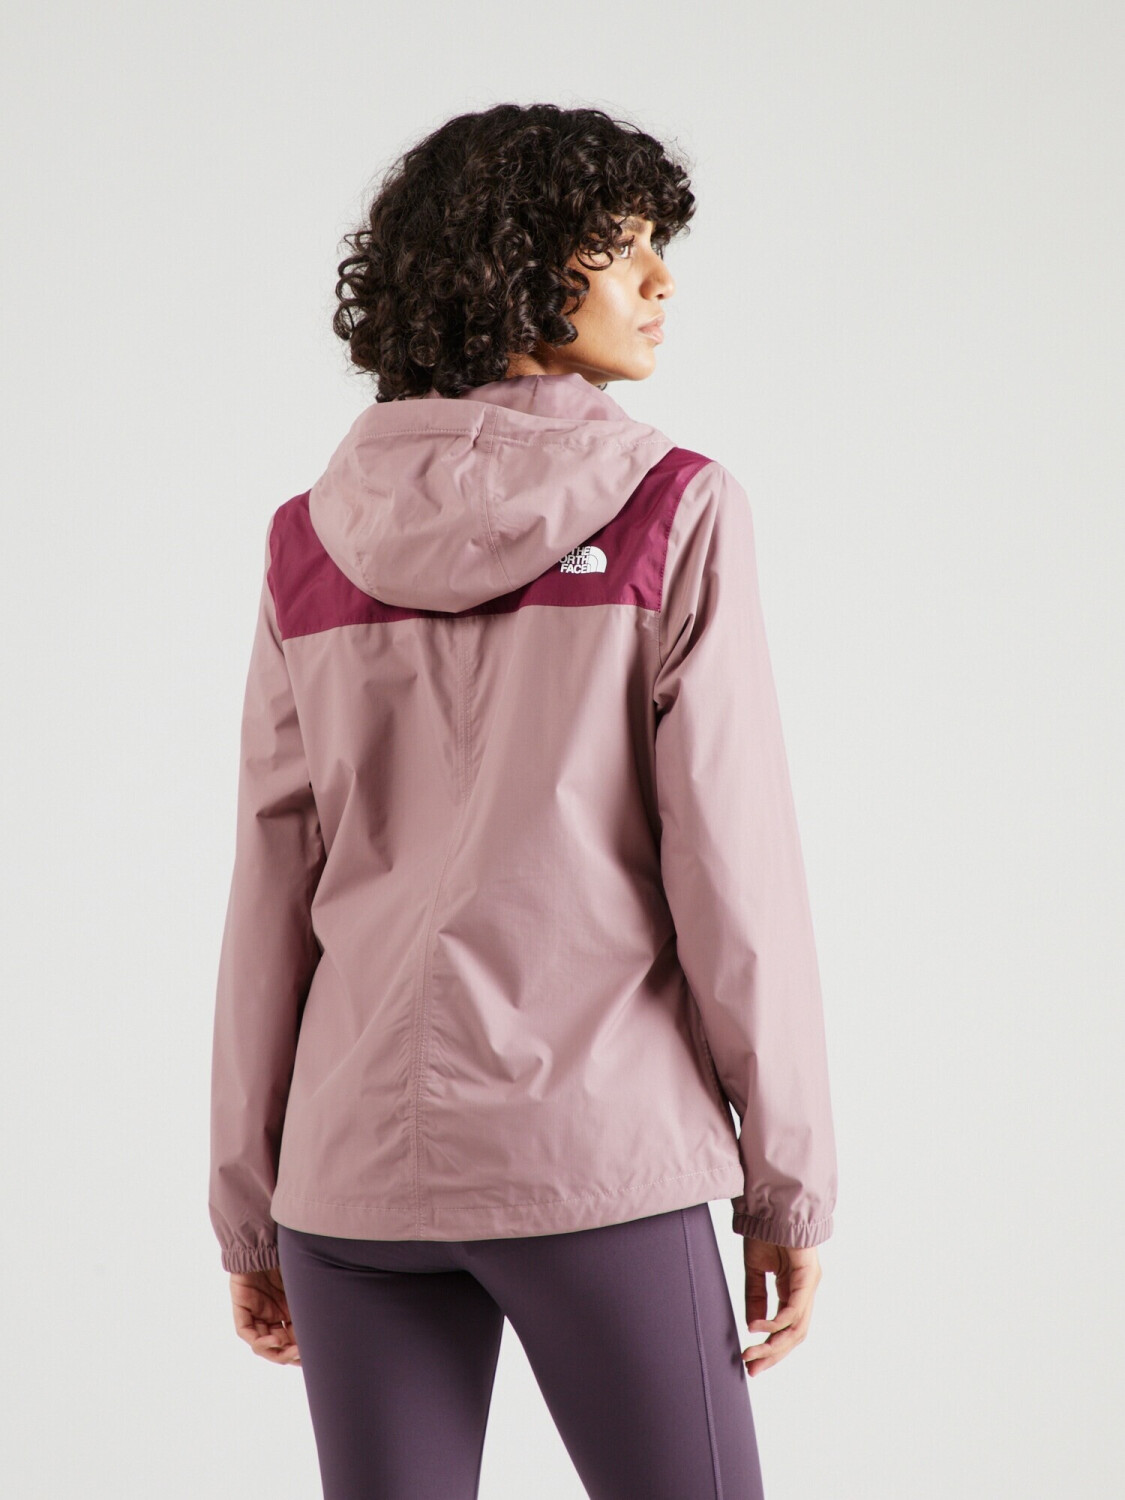 The North Face Women's Antora Jacket fawn grey/boysenberry ab 78,59 € |  Preisvergleich bei